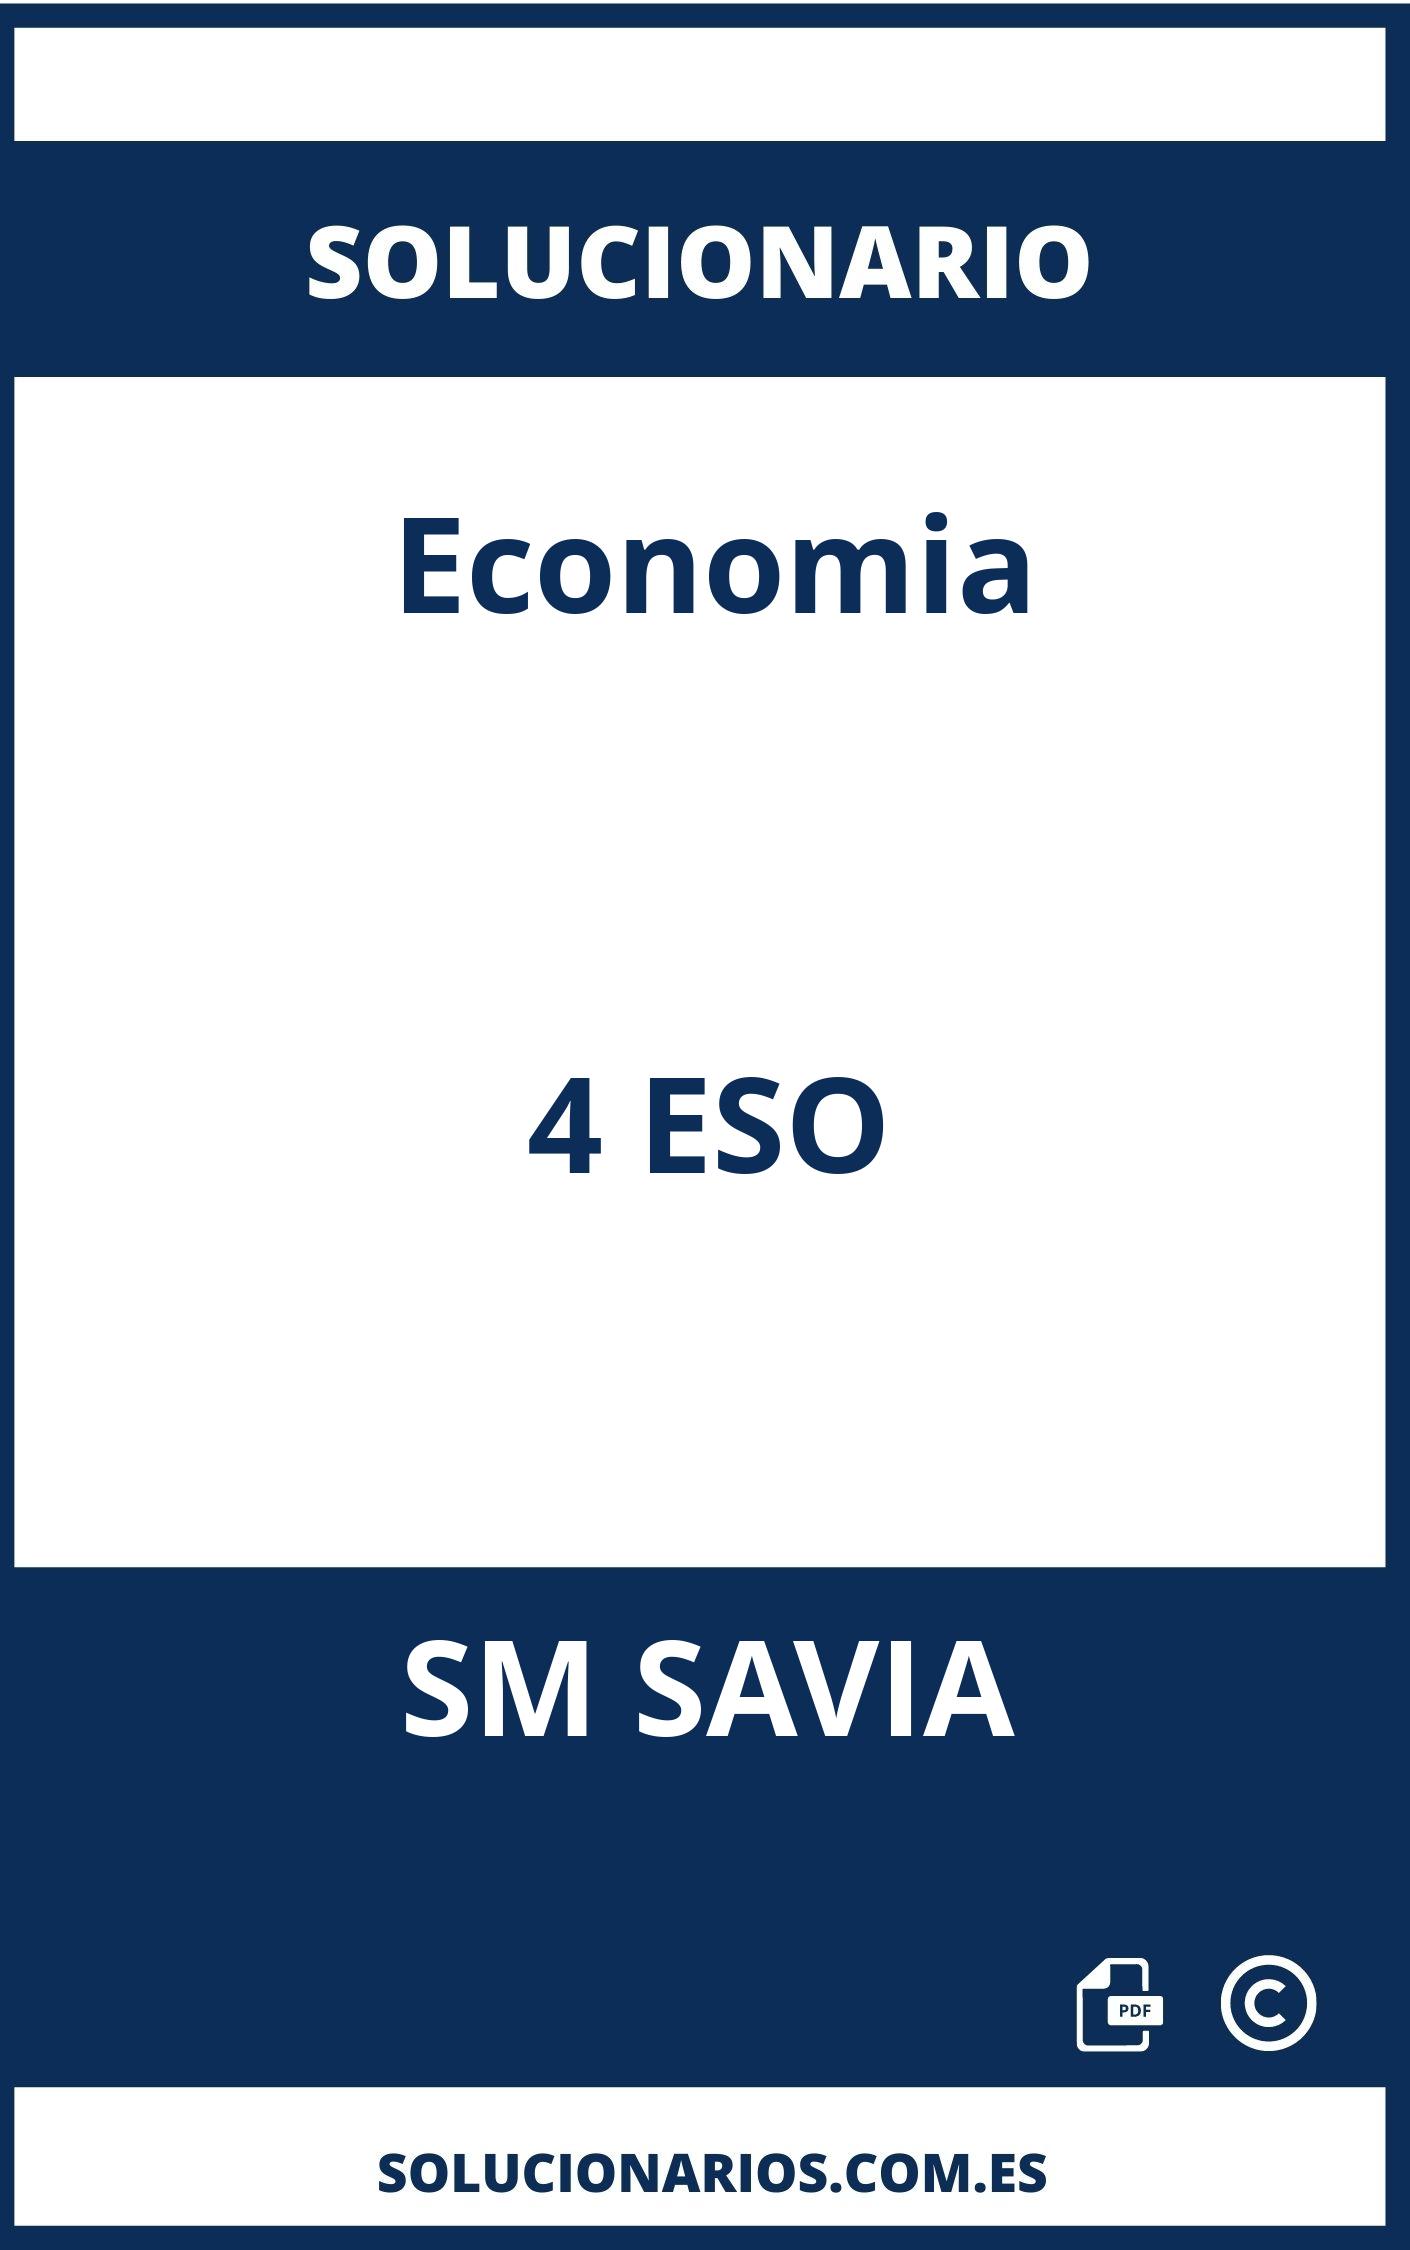 Solucionario Economia 4 ESO SM SAVIA